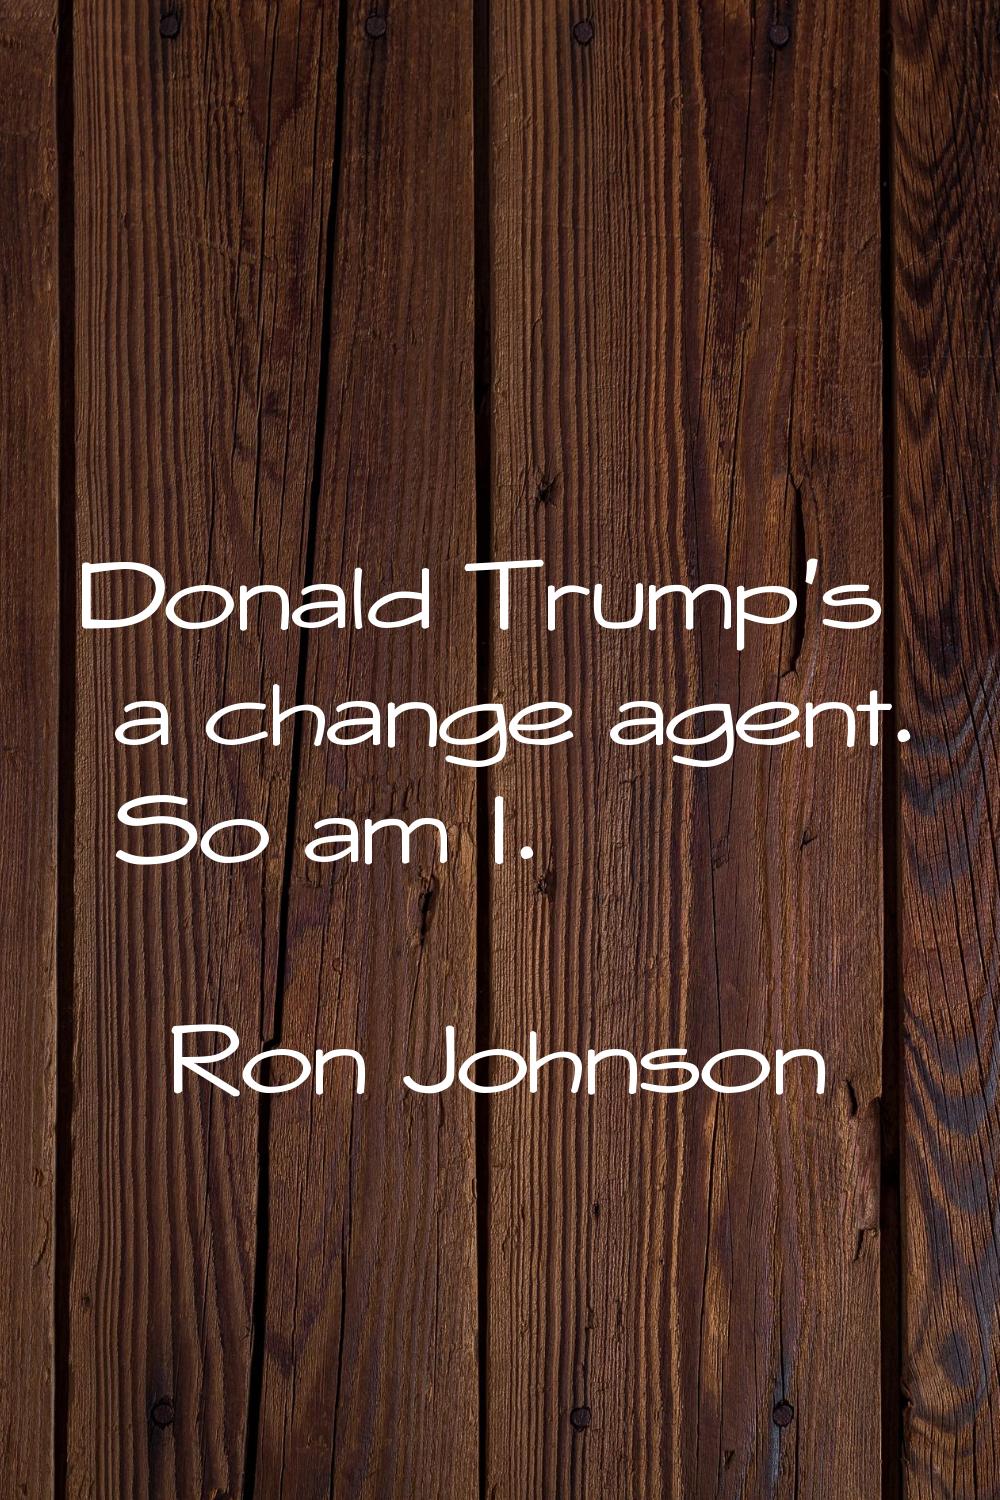 Donald Trump's a change agent. So am I.